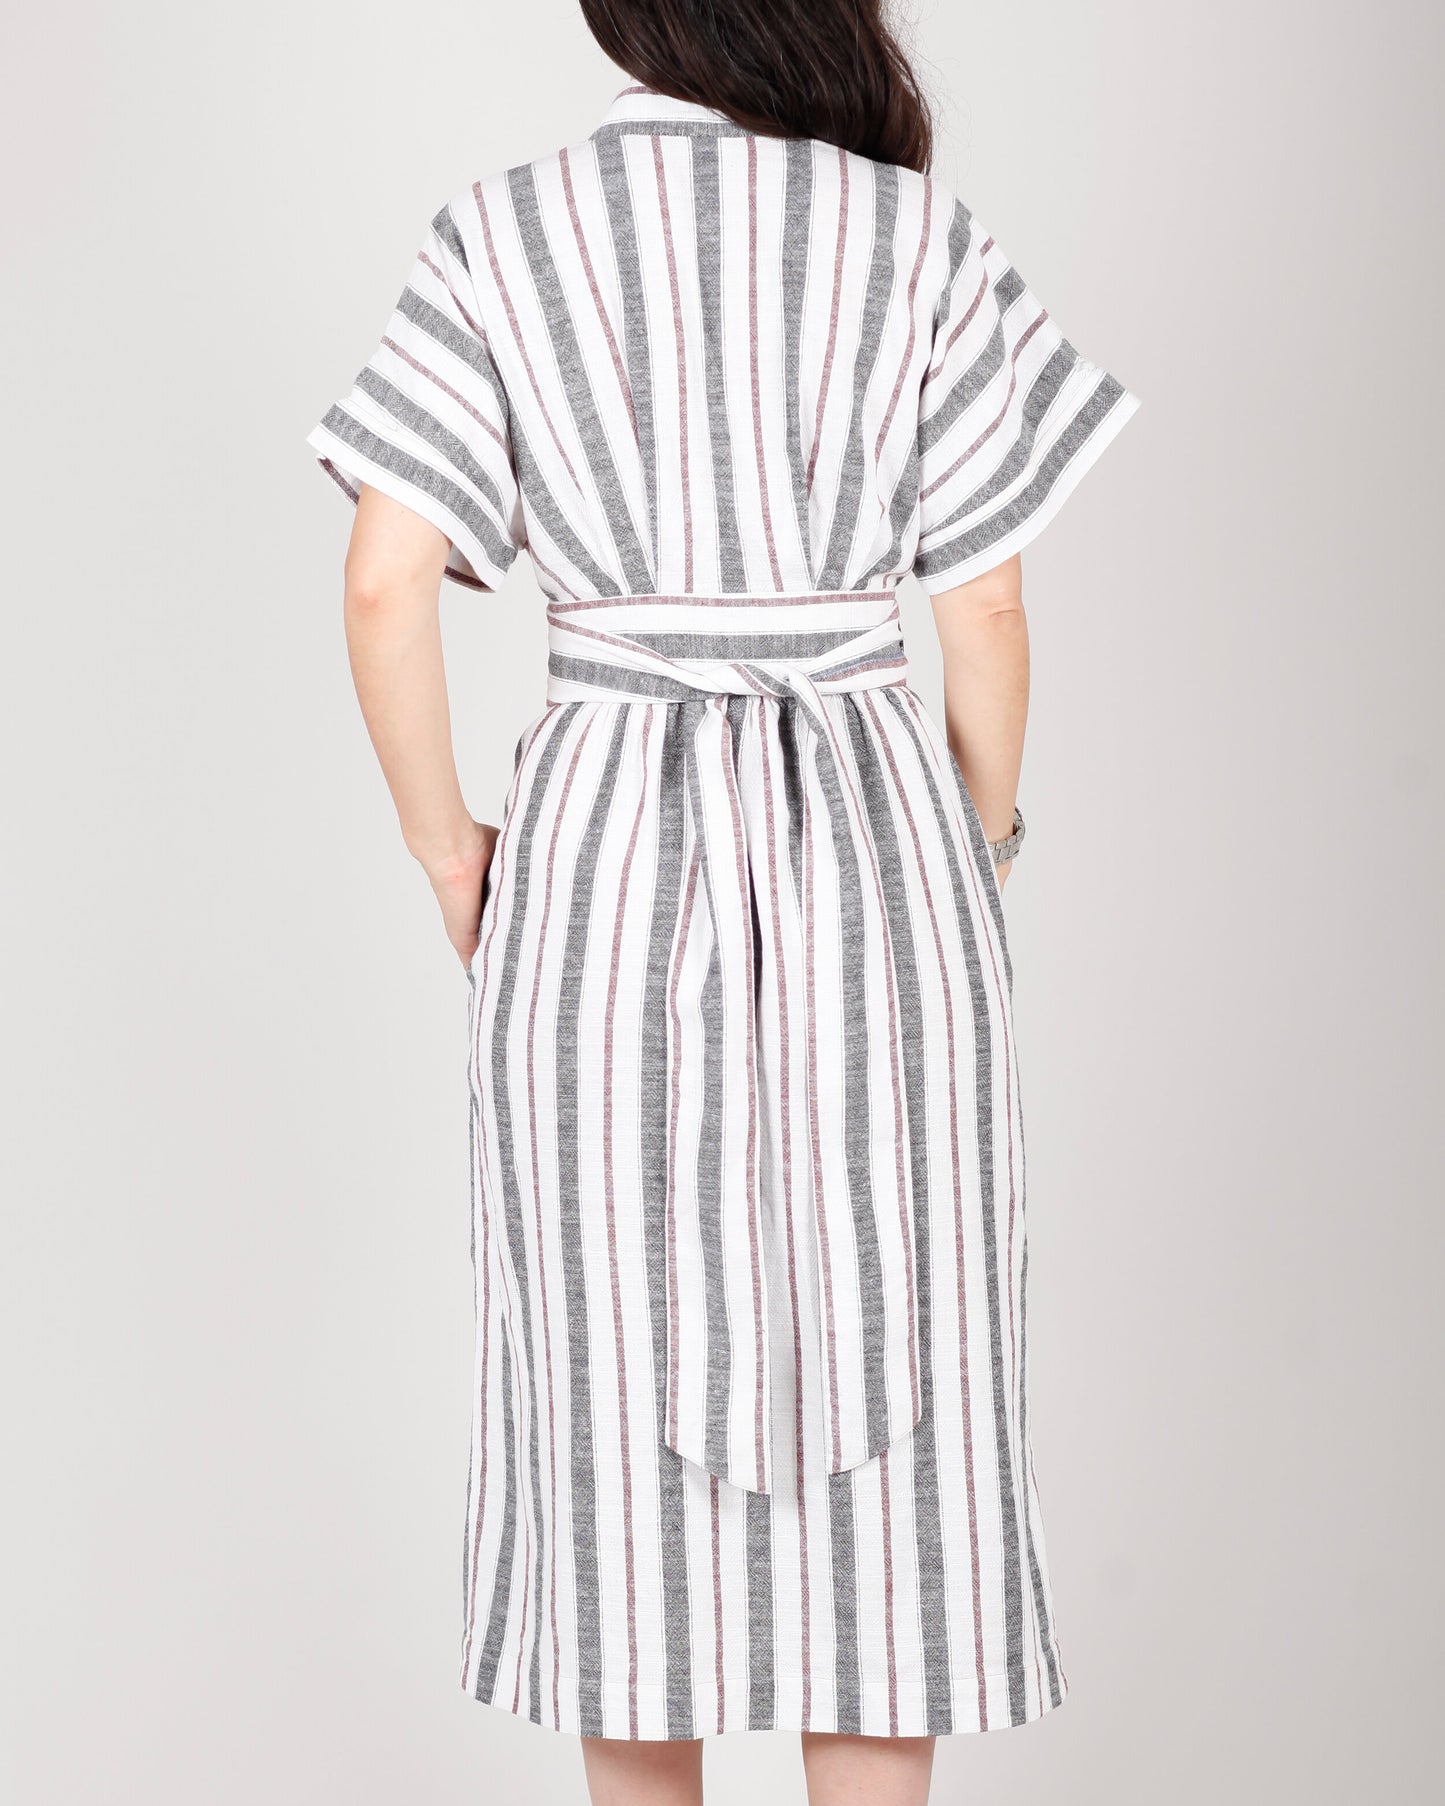 Helena Wrap Dress - PDF Sewing Pattern